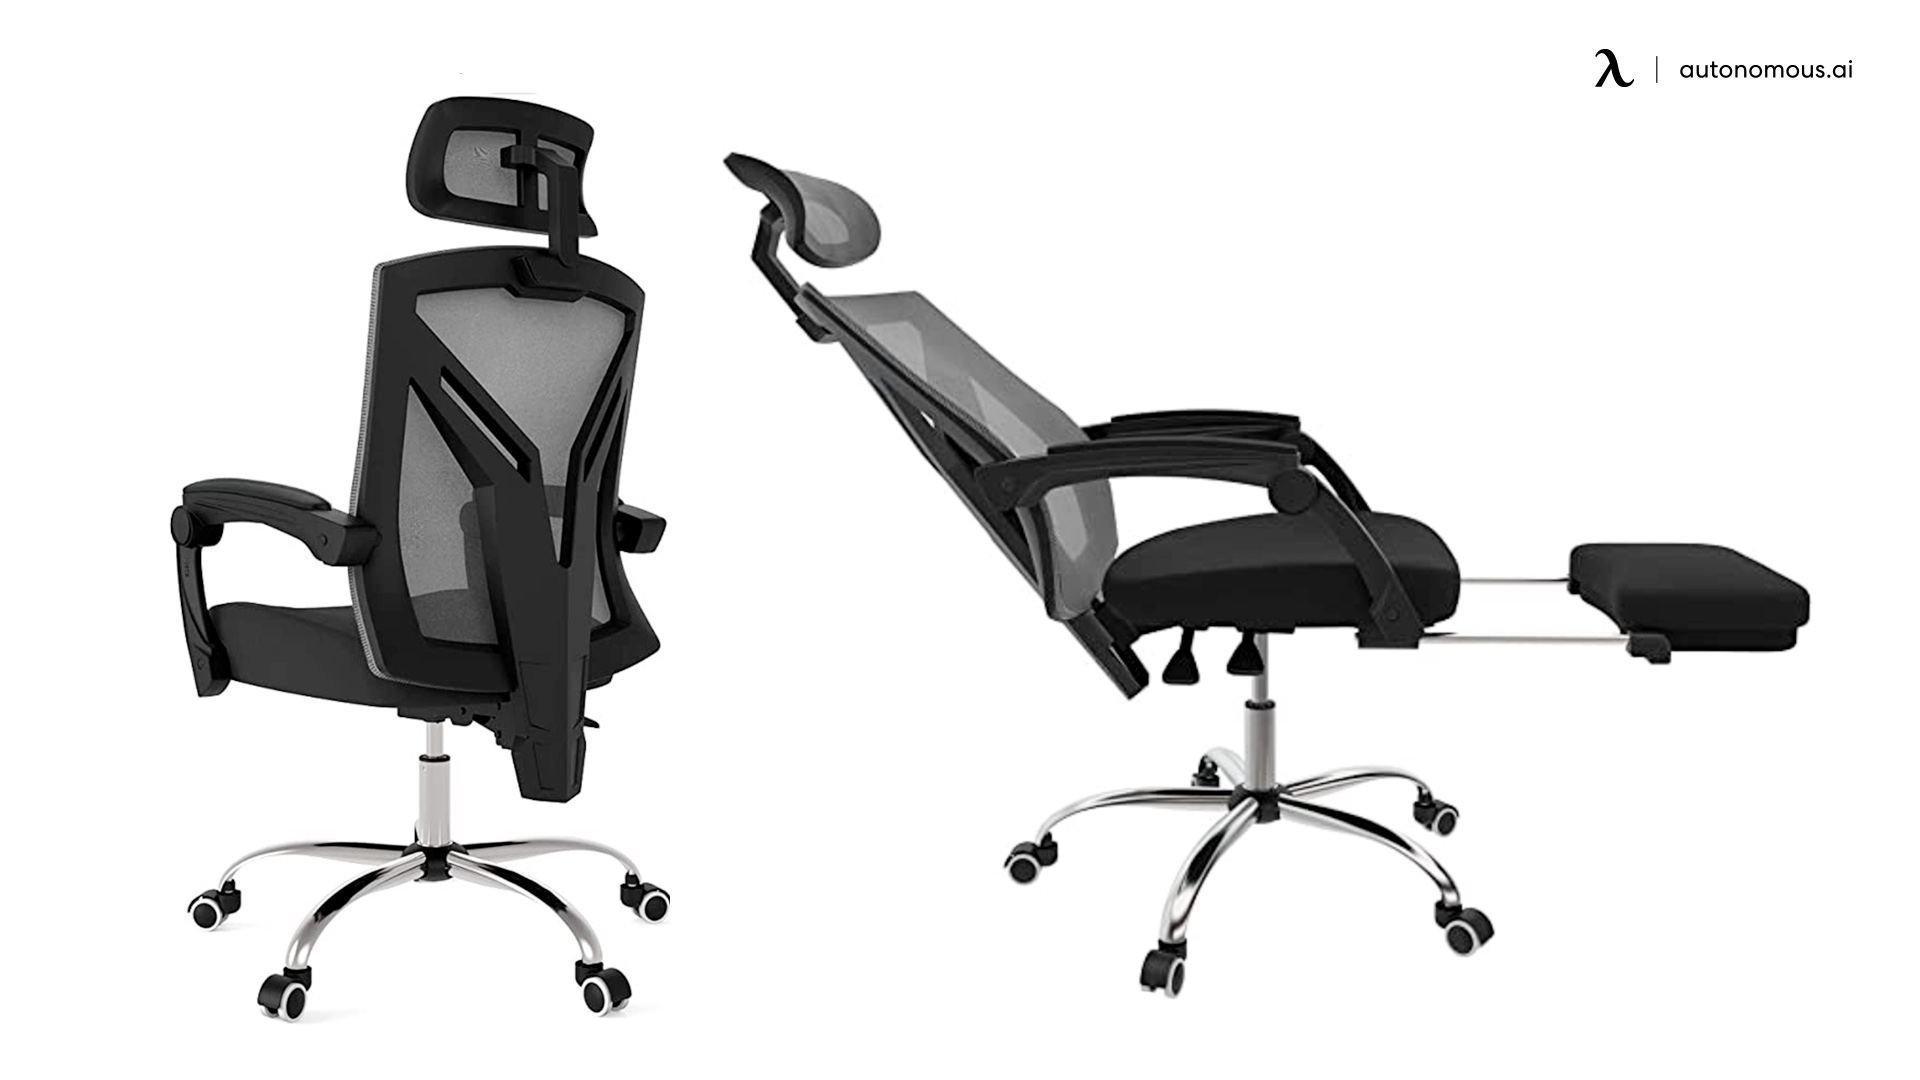 Hbada Ergonomic Office Chair